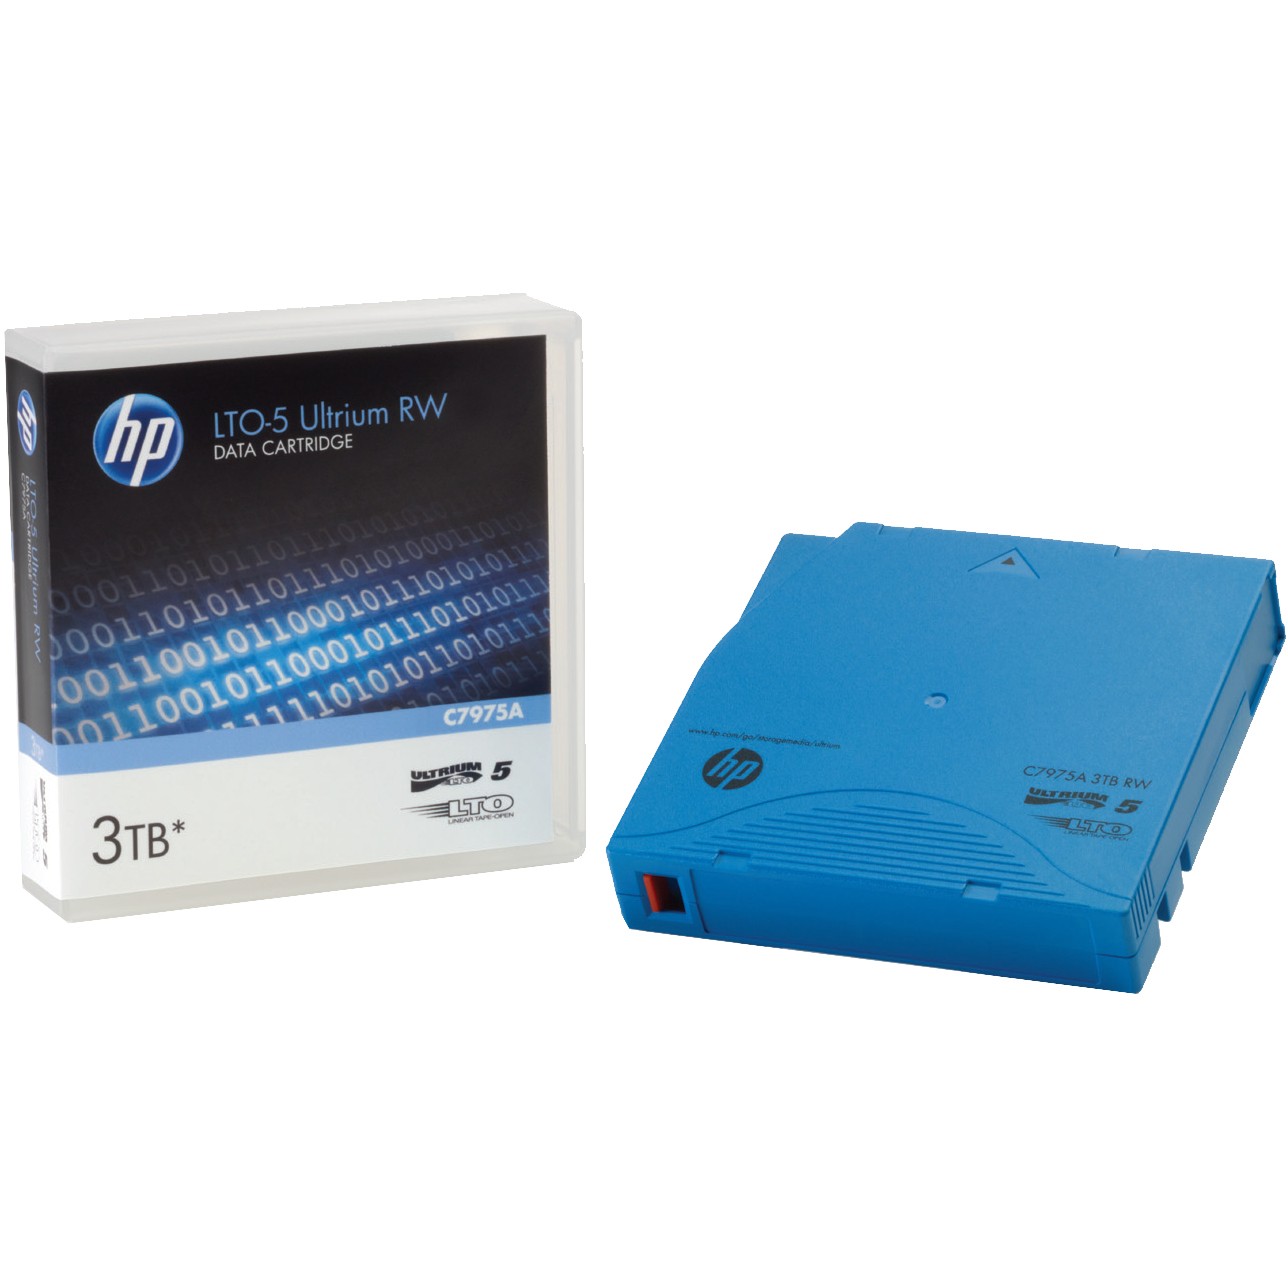 HPE C7975A backup storage media